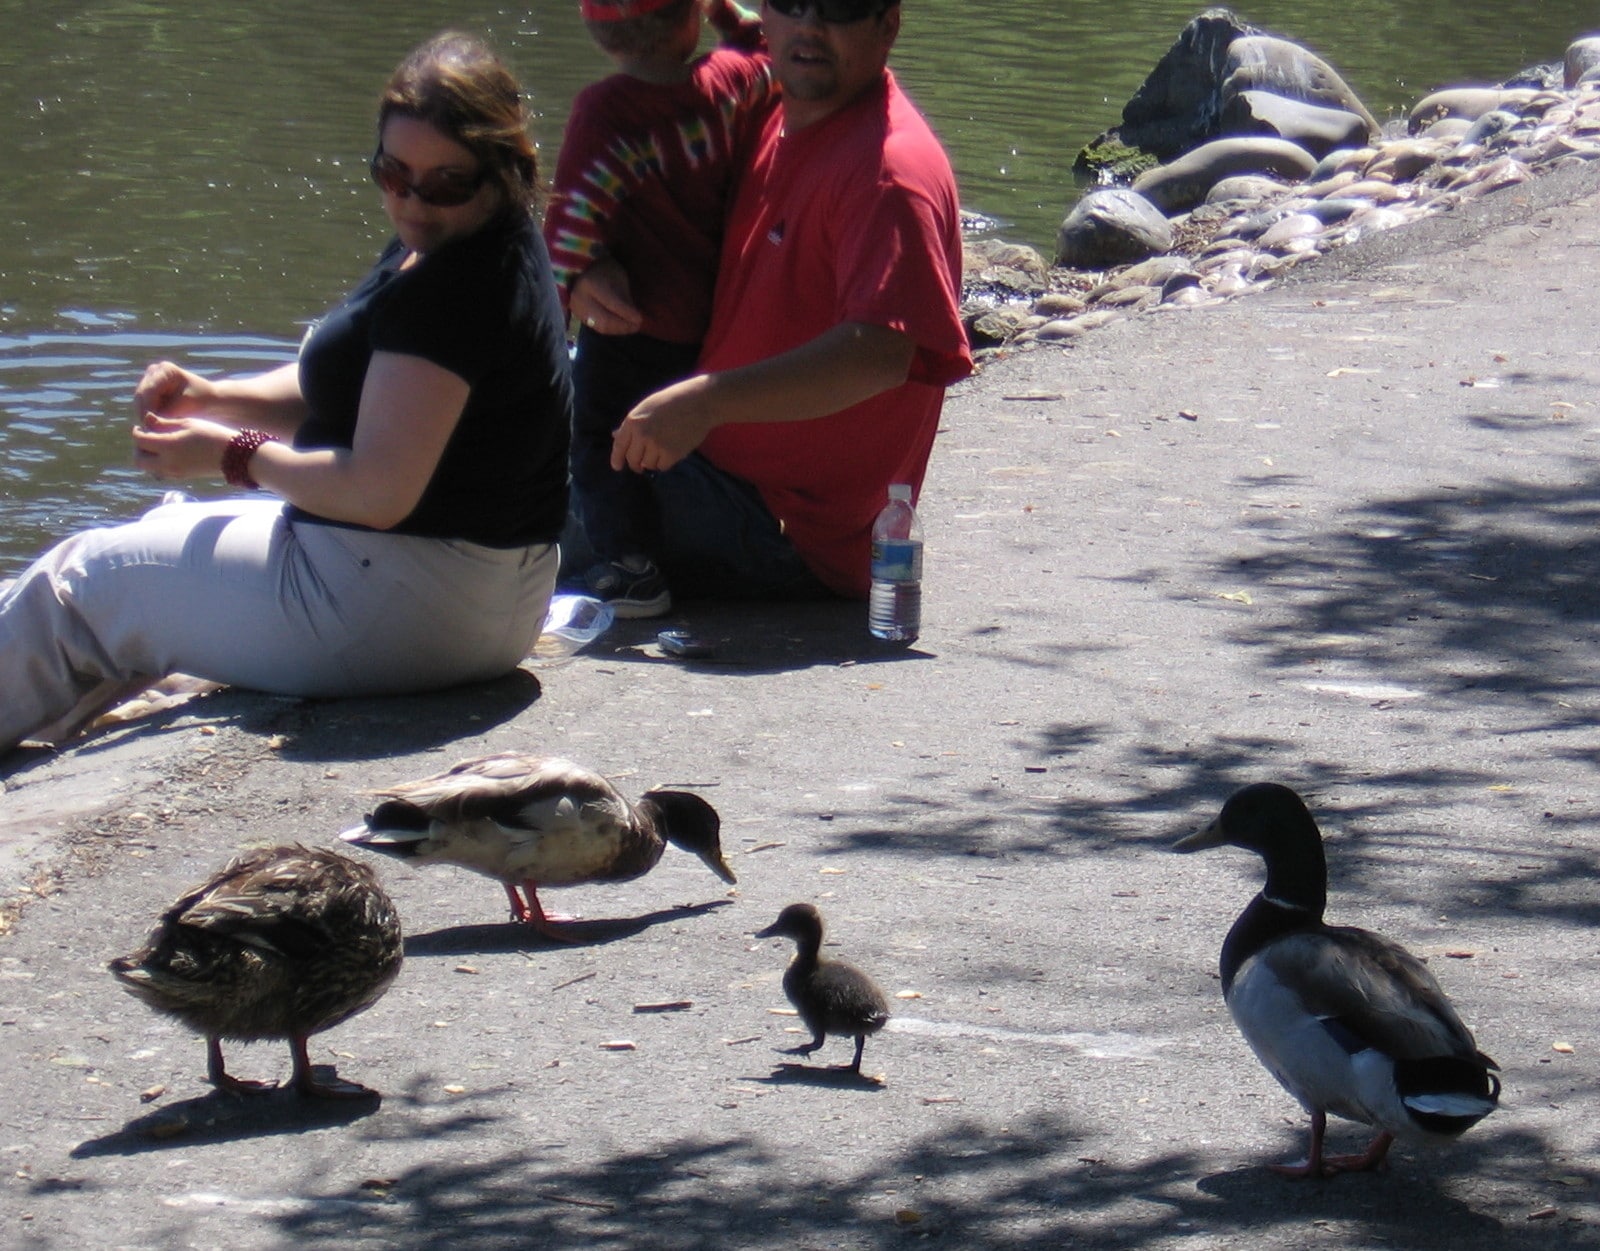 Feeding the ducks. Photo by Susan Miller